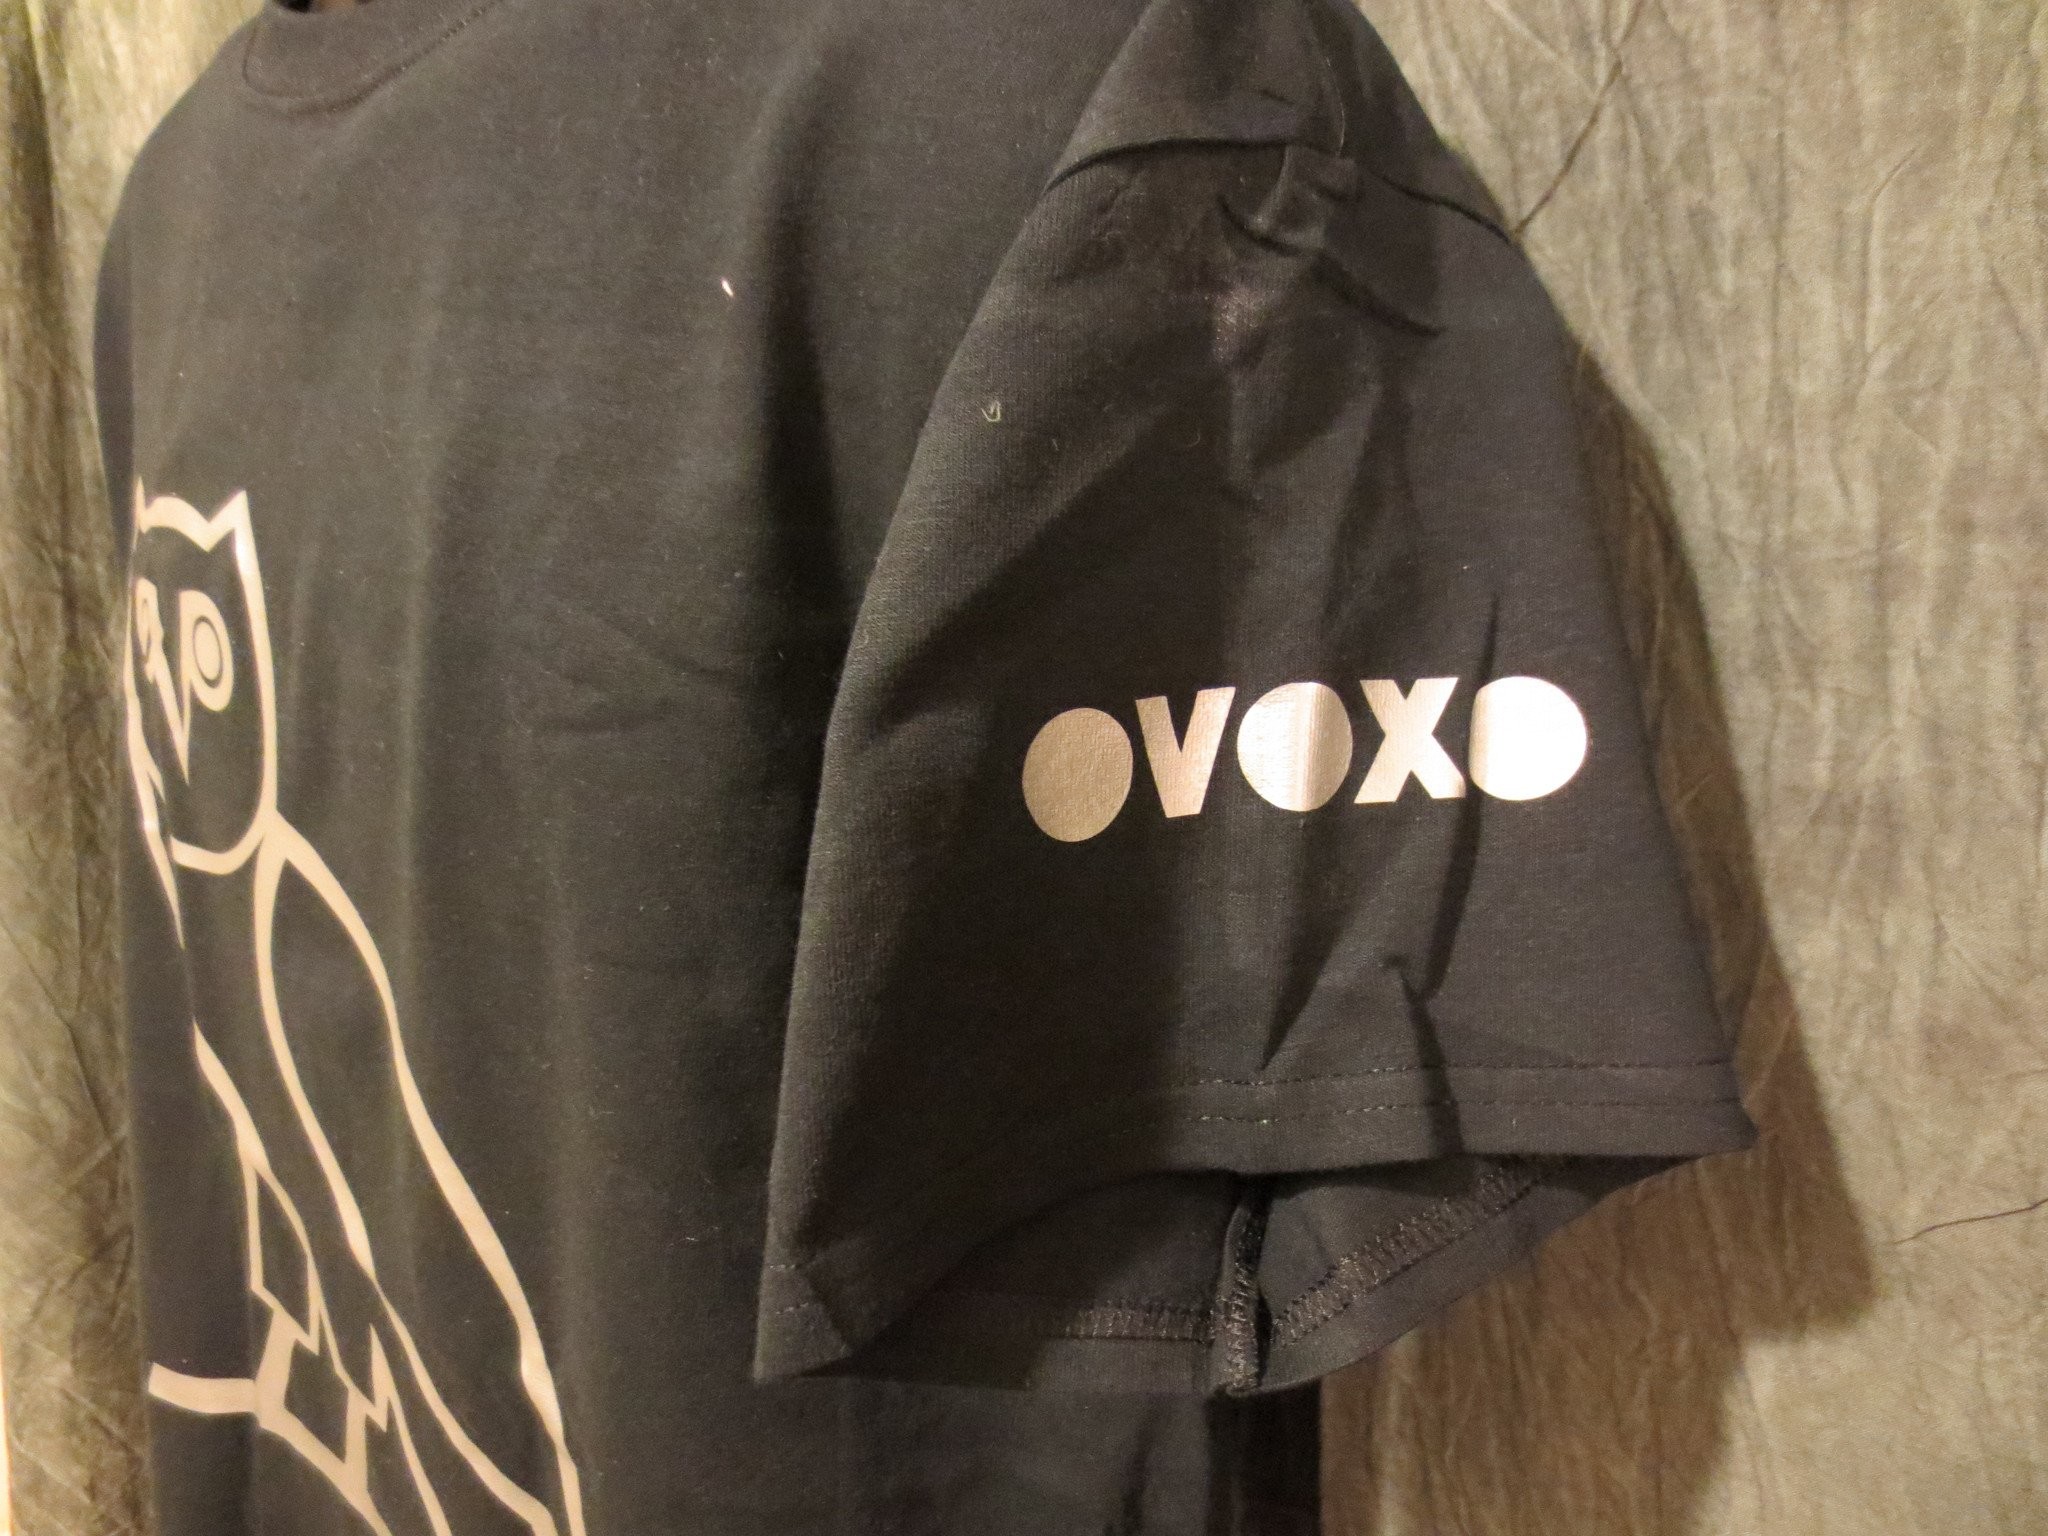 2048x1536 Ovo Drake October's Very Own "Ovoxo Owl Gang" Tshirt - TshirtNow.net -